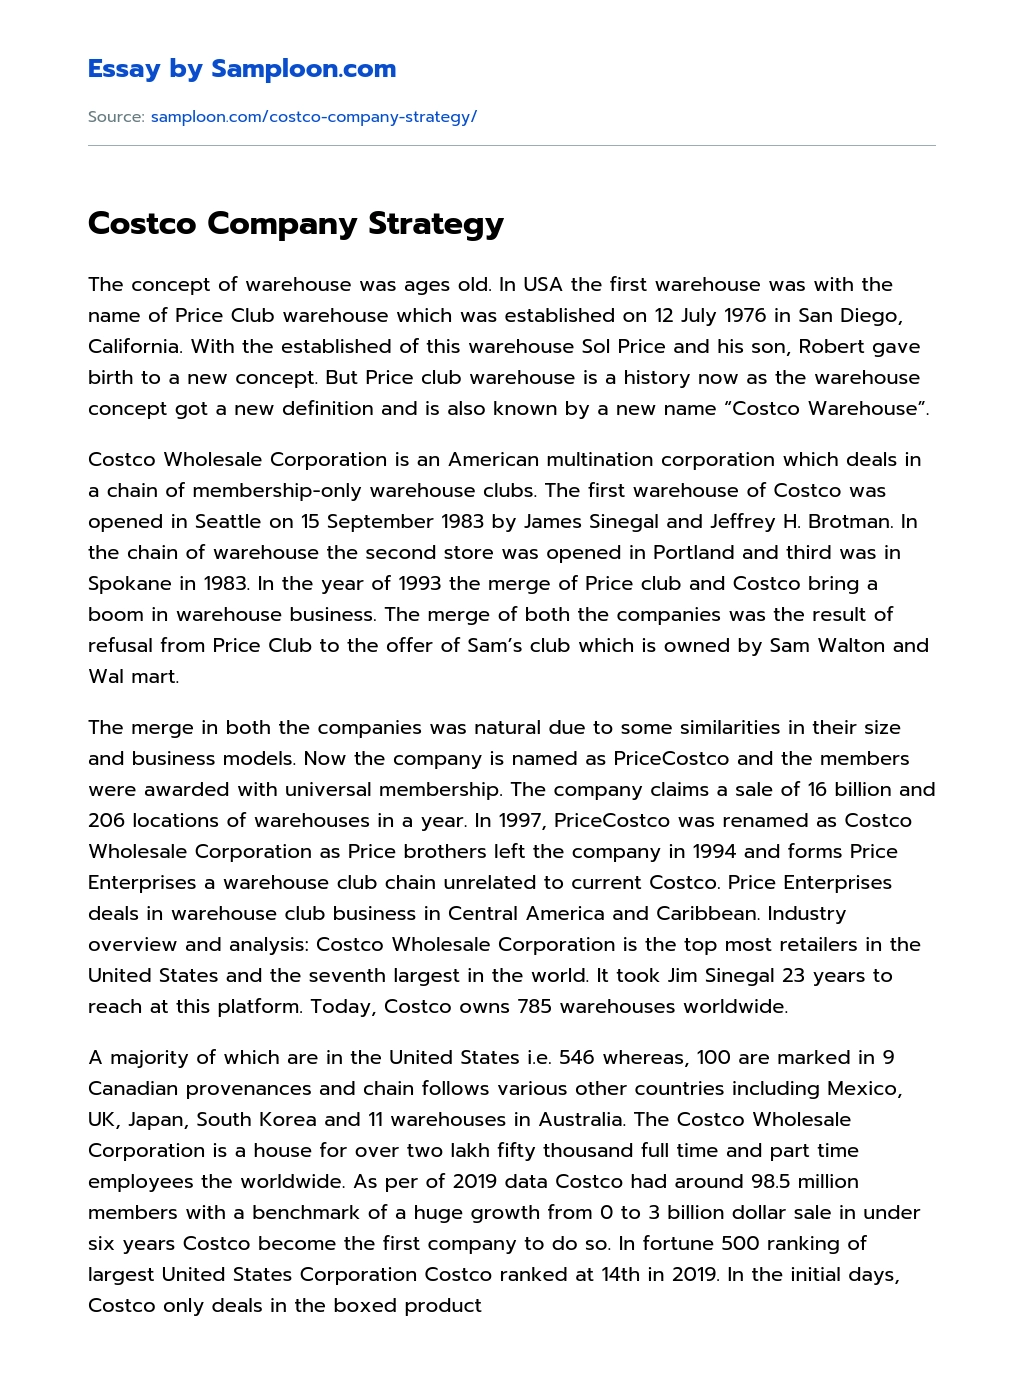 Costco Company Strategy essay